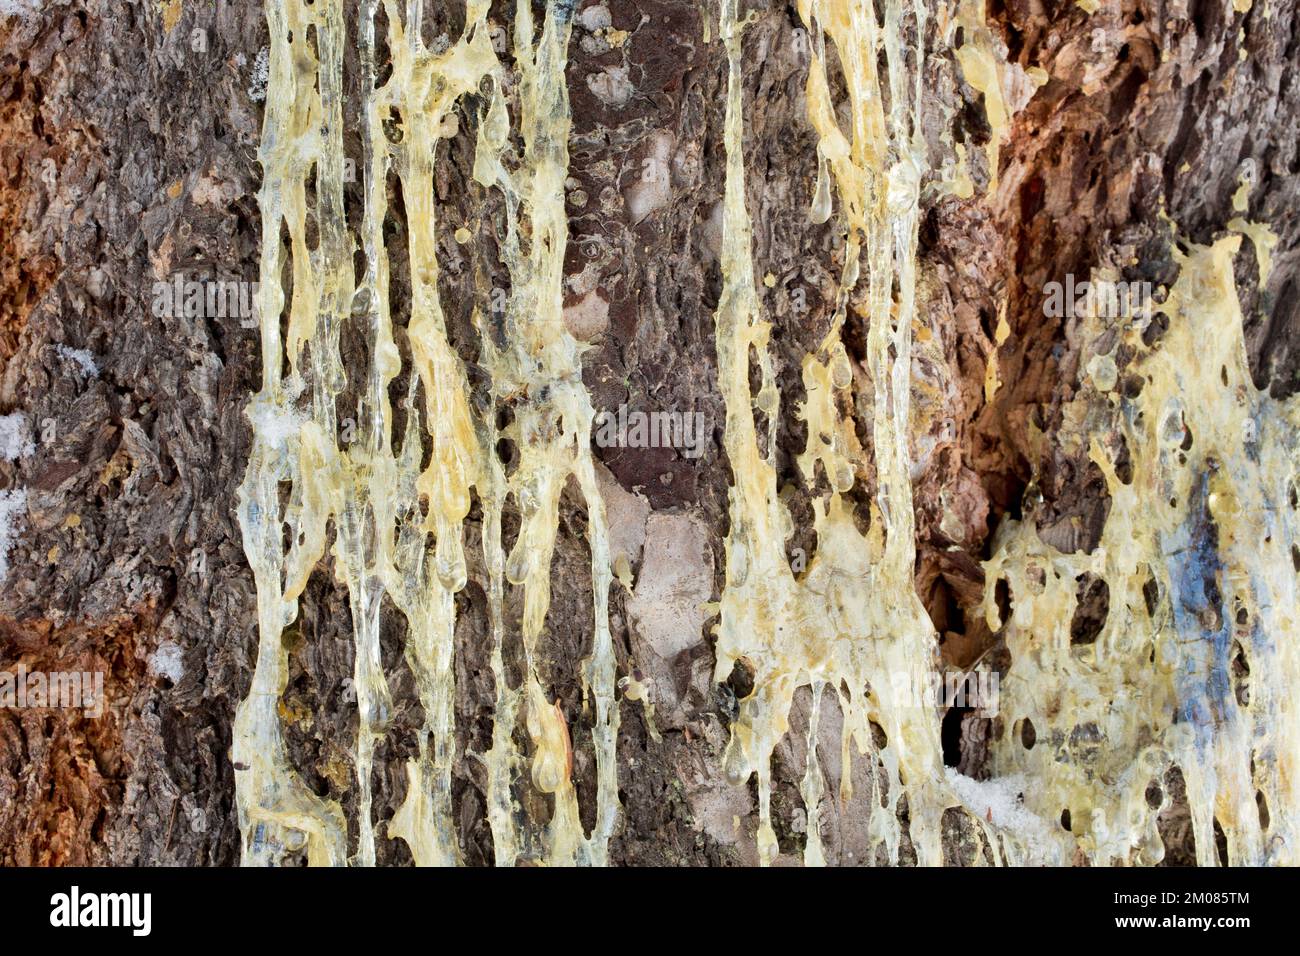 Solidified sap running down Rocky Mountain Douglas fir tree bark, Pseudotsuga menziesii var. glauca, Troy, Montana. Stock Photo